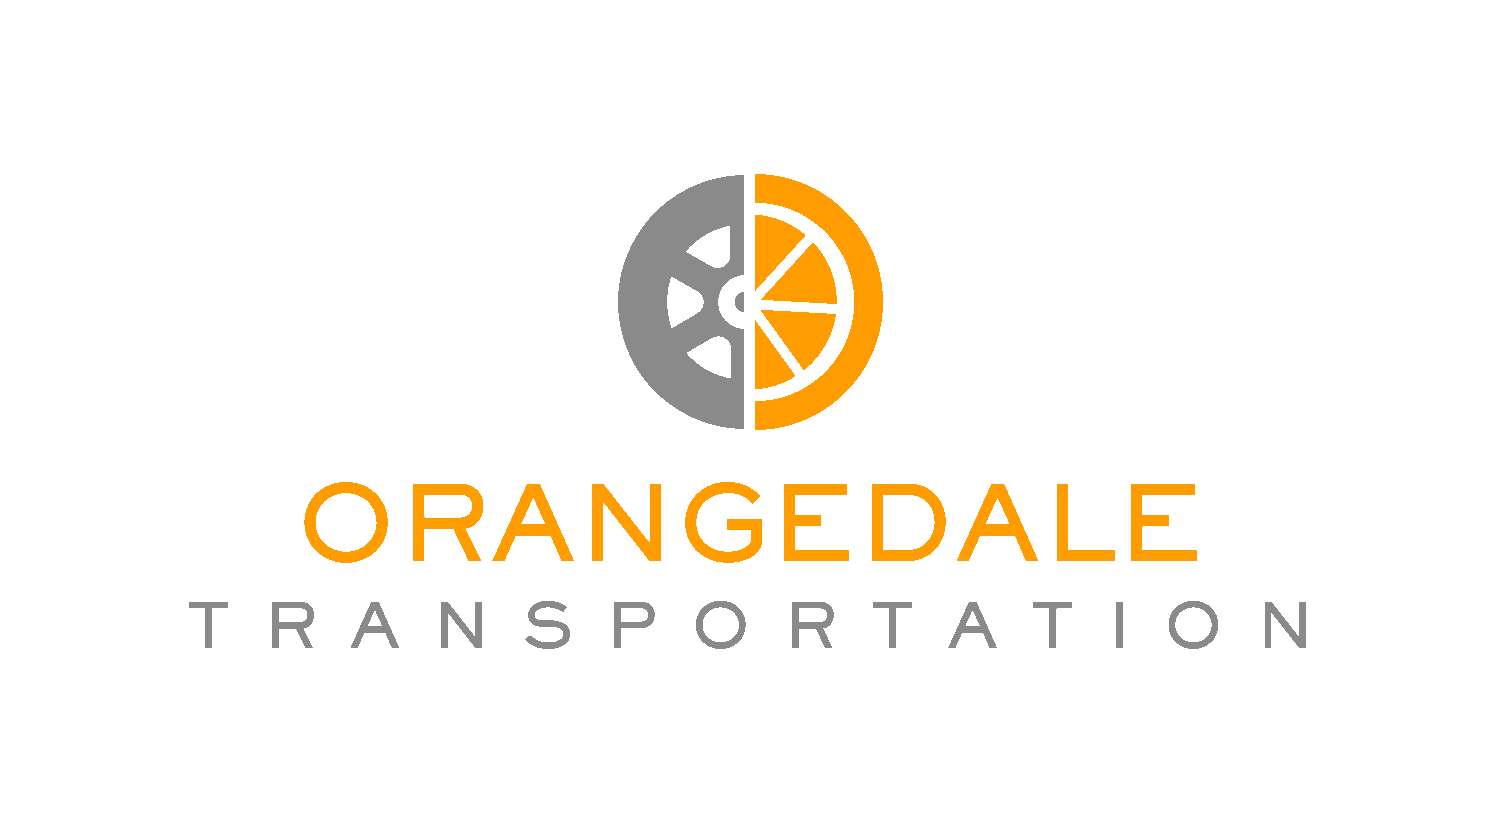  Orangedale Transportation